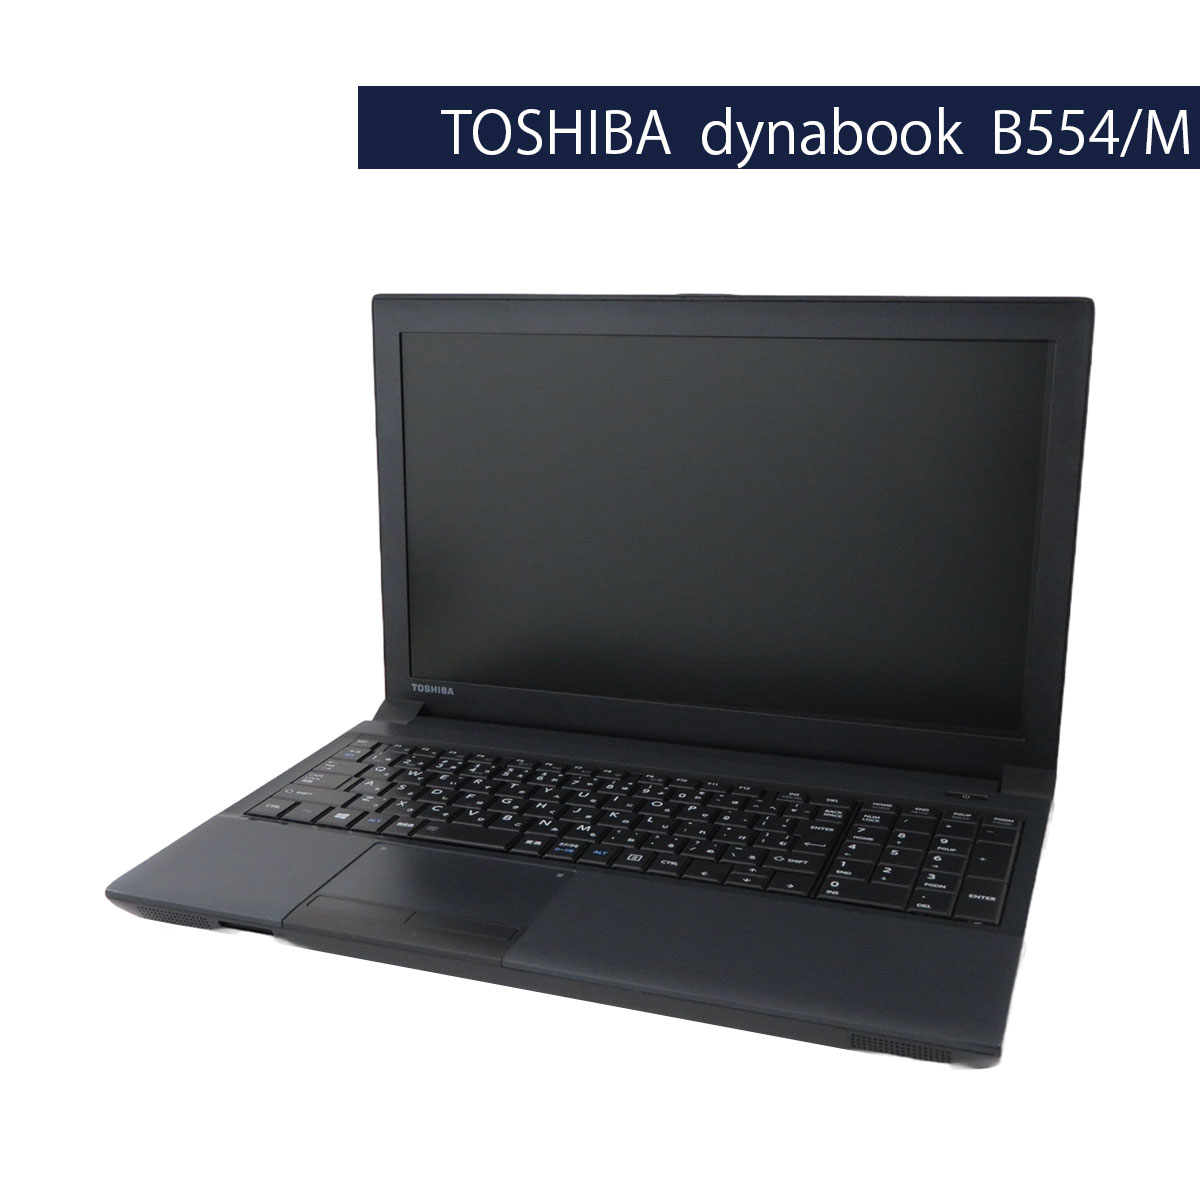 TOSHIBA dynabook B554/M Core i3 4100M 4GB 320GB (Win10Pro)